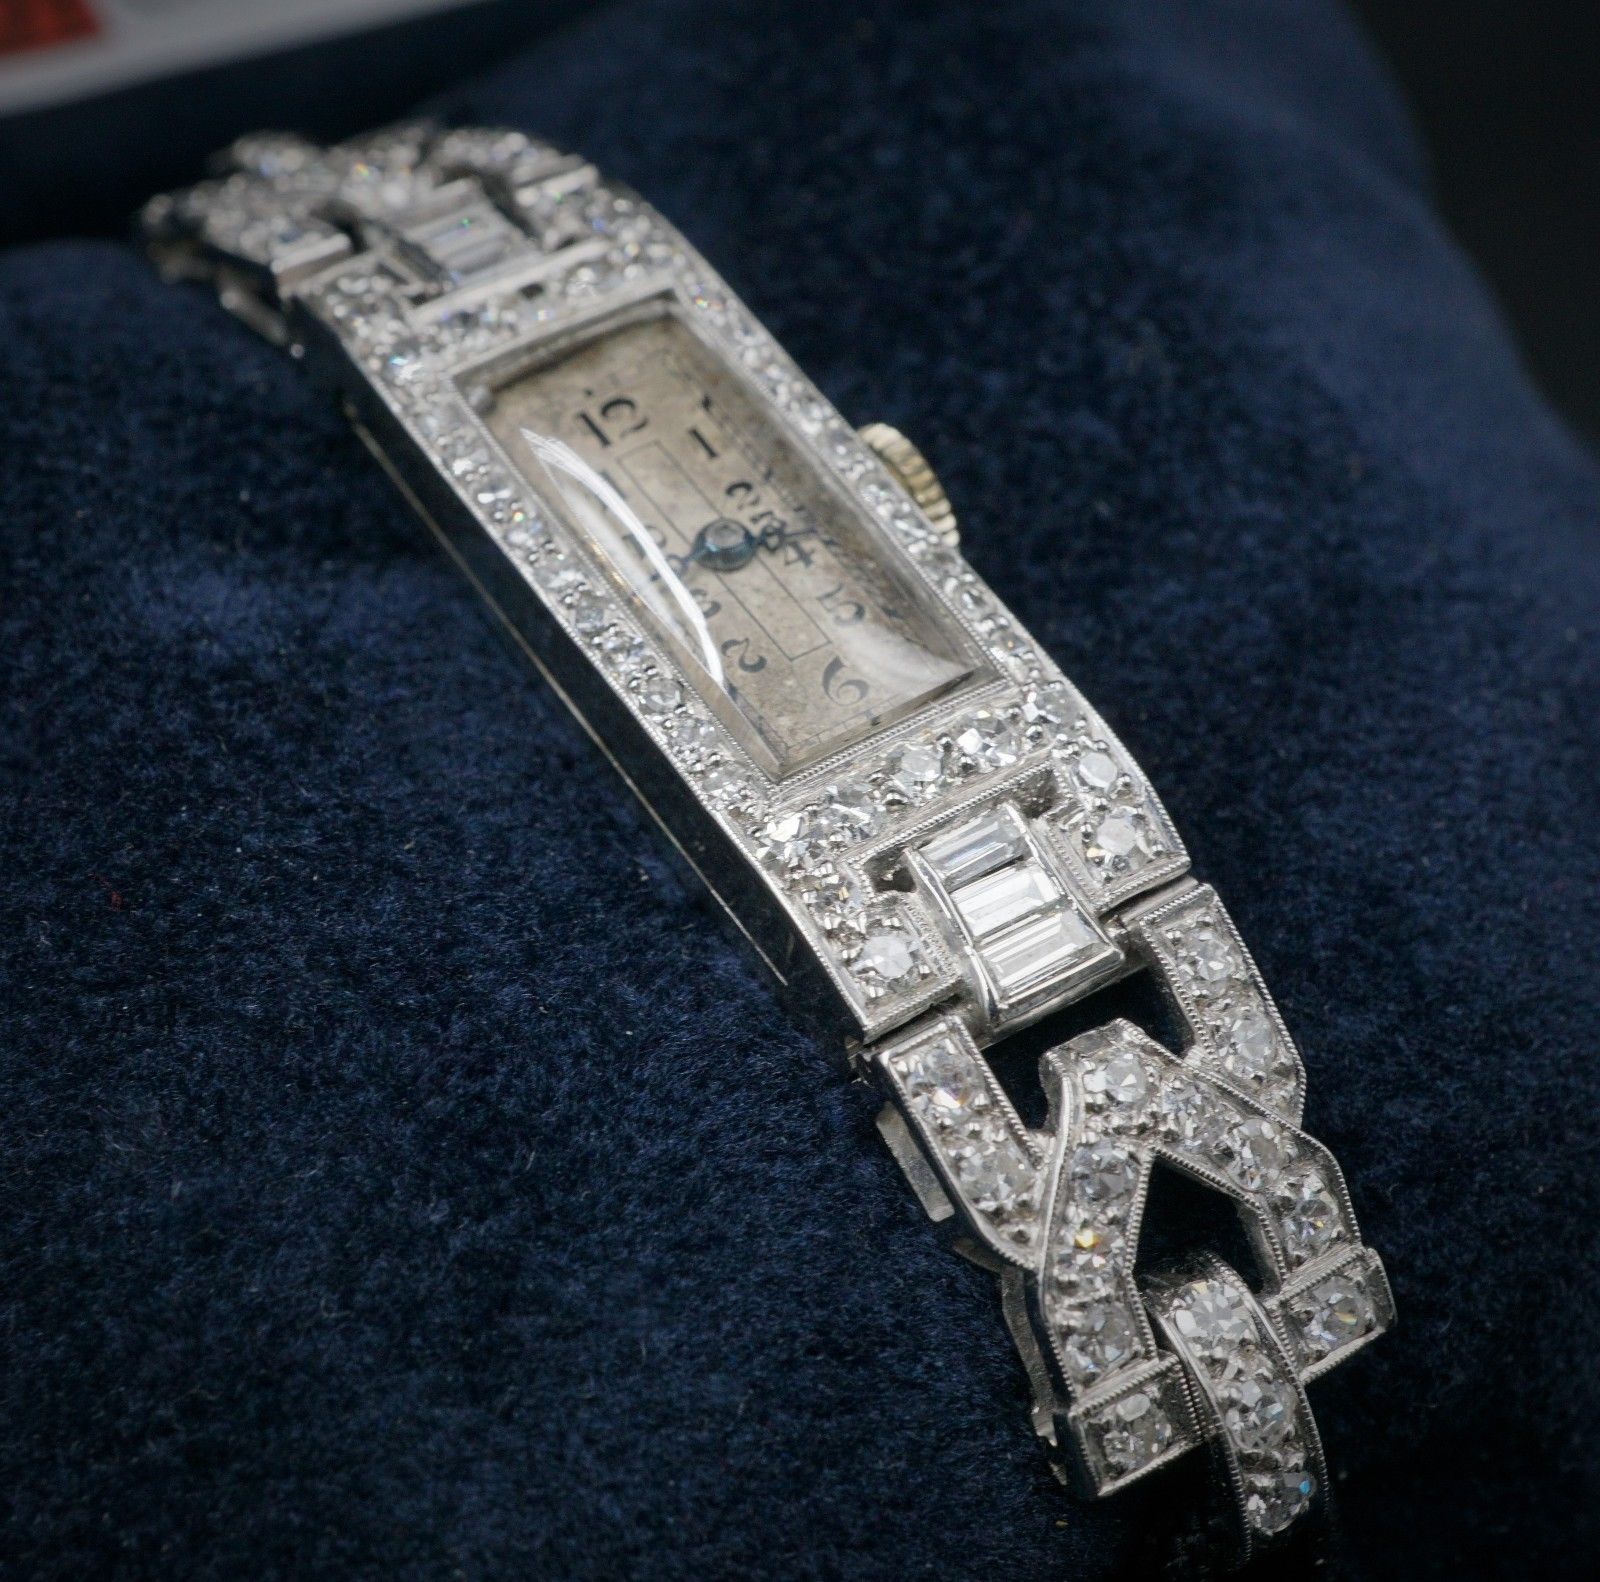 Watch: Edwardian era Rado brand 17 jewel mechanical movement watch with black cord band, fastening with a fold-over locking clasp | 68 diamonds | 1.32 carats | Appraisal: $19,950